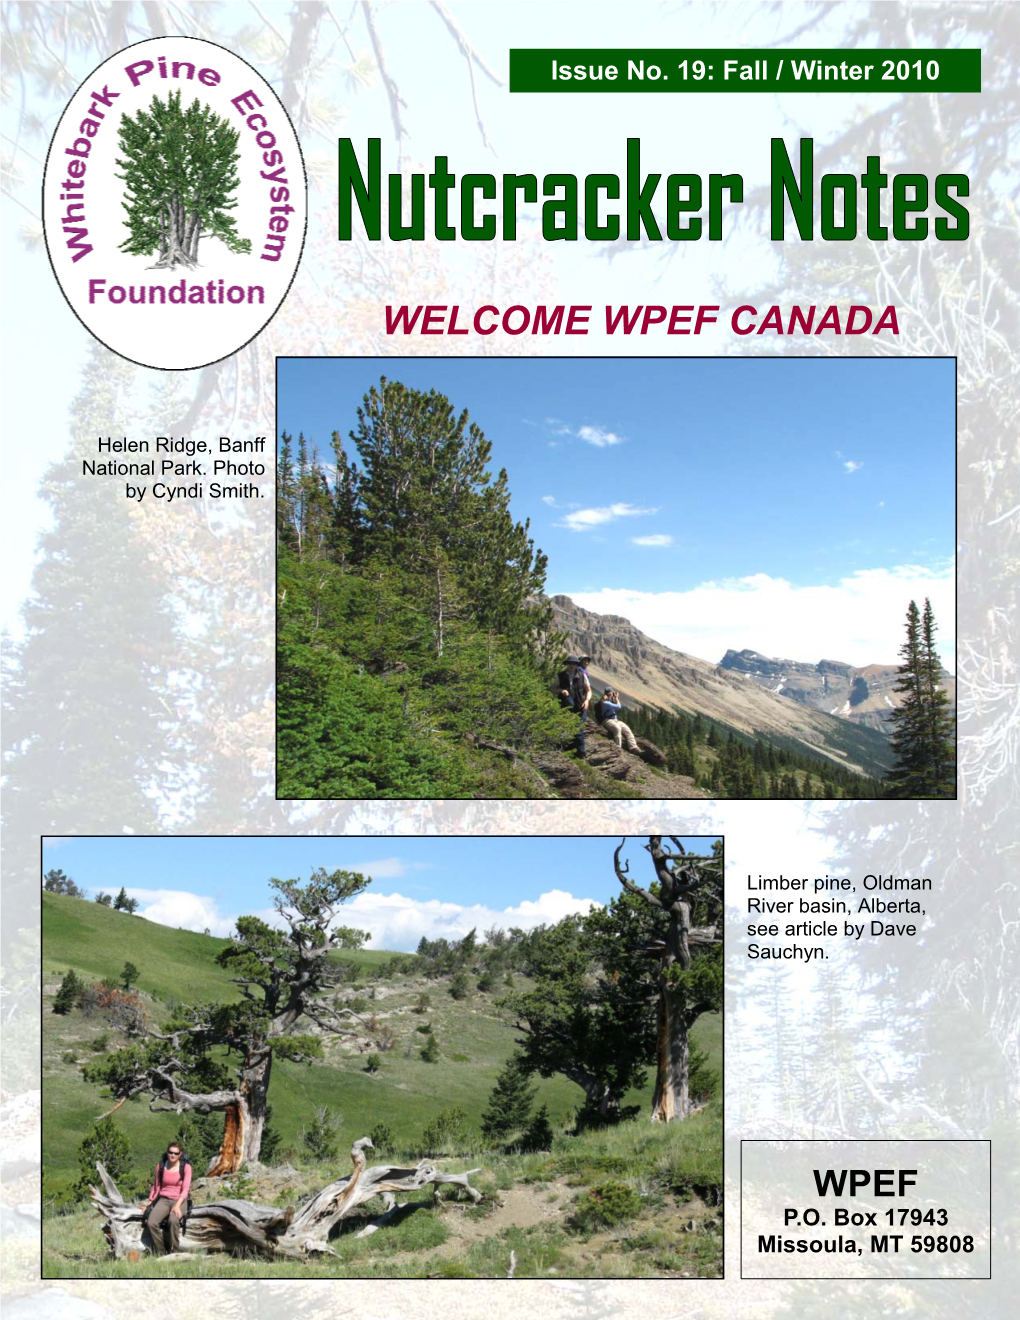 Nutcracker Notes, Issue No